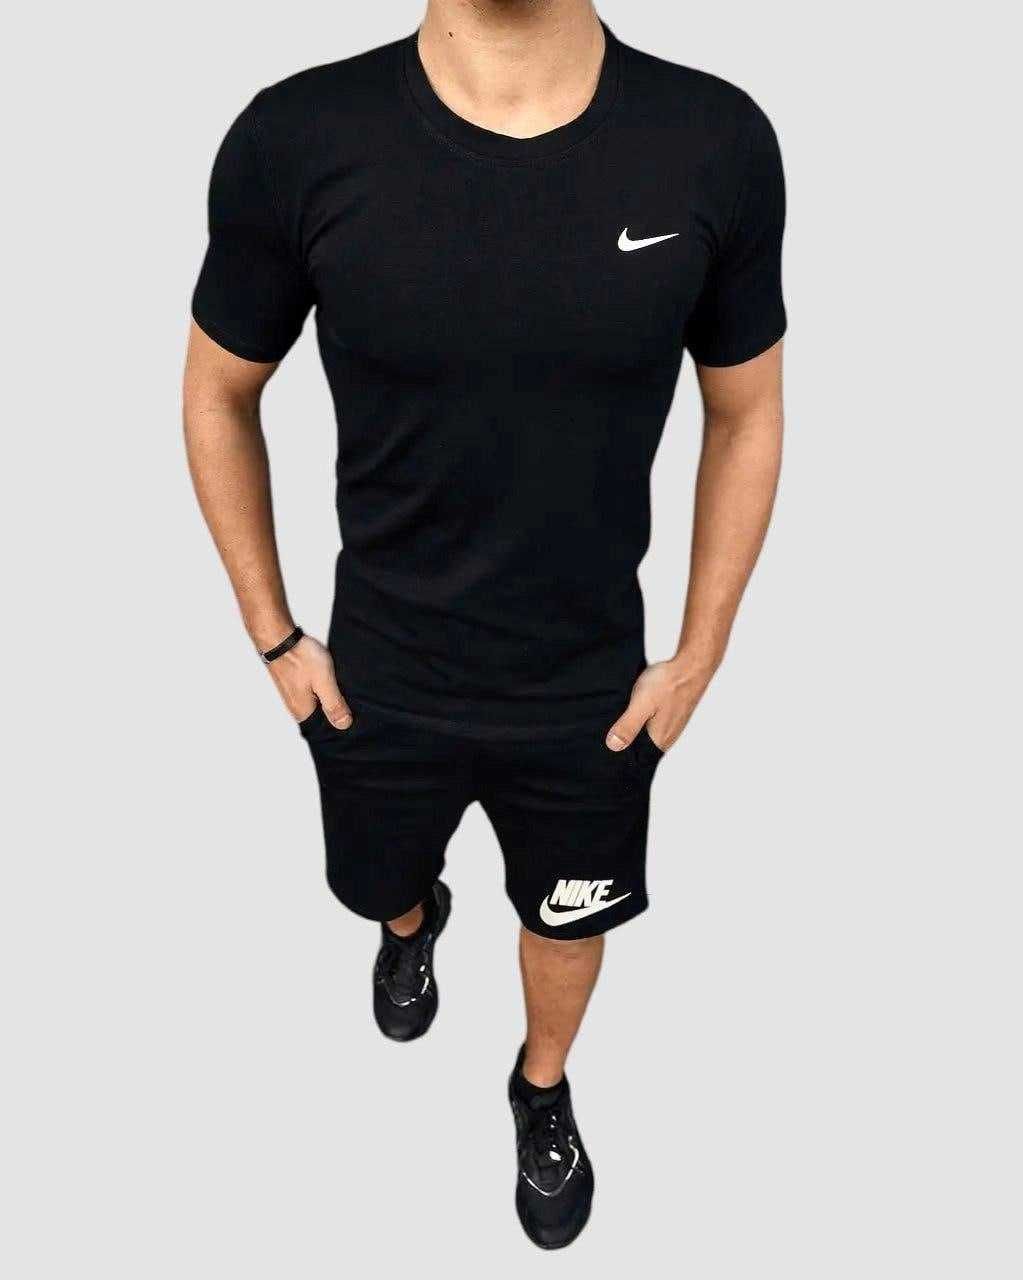 Мужской летний комплект Nike футболка + шорты